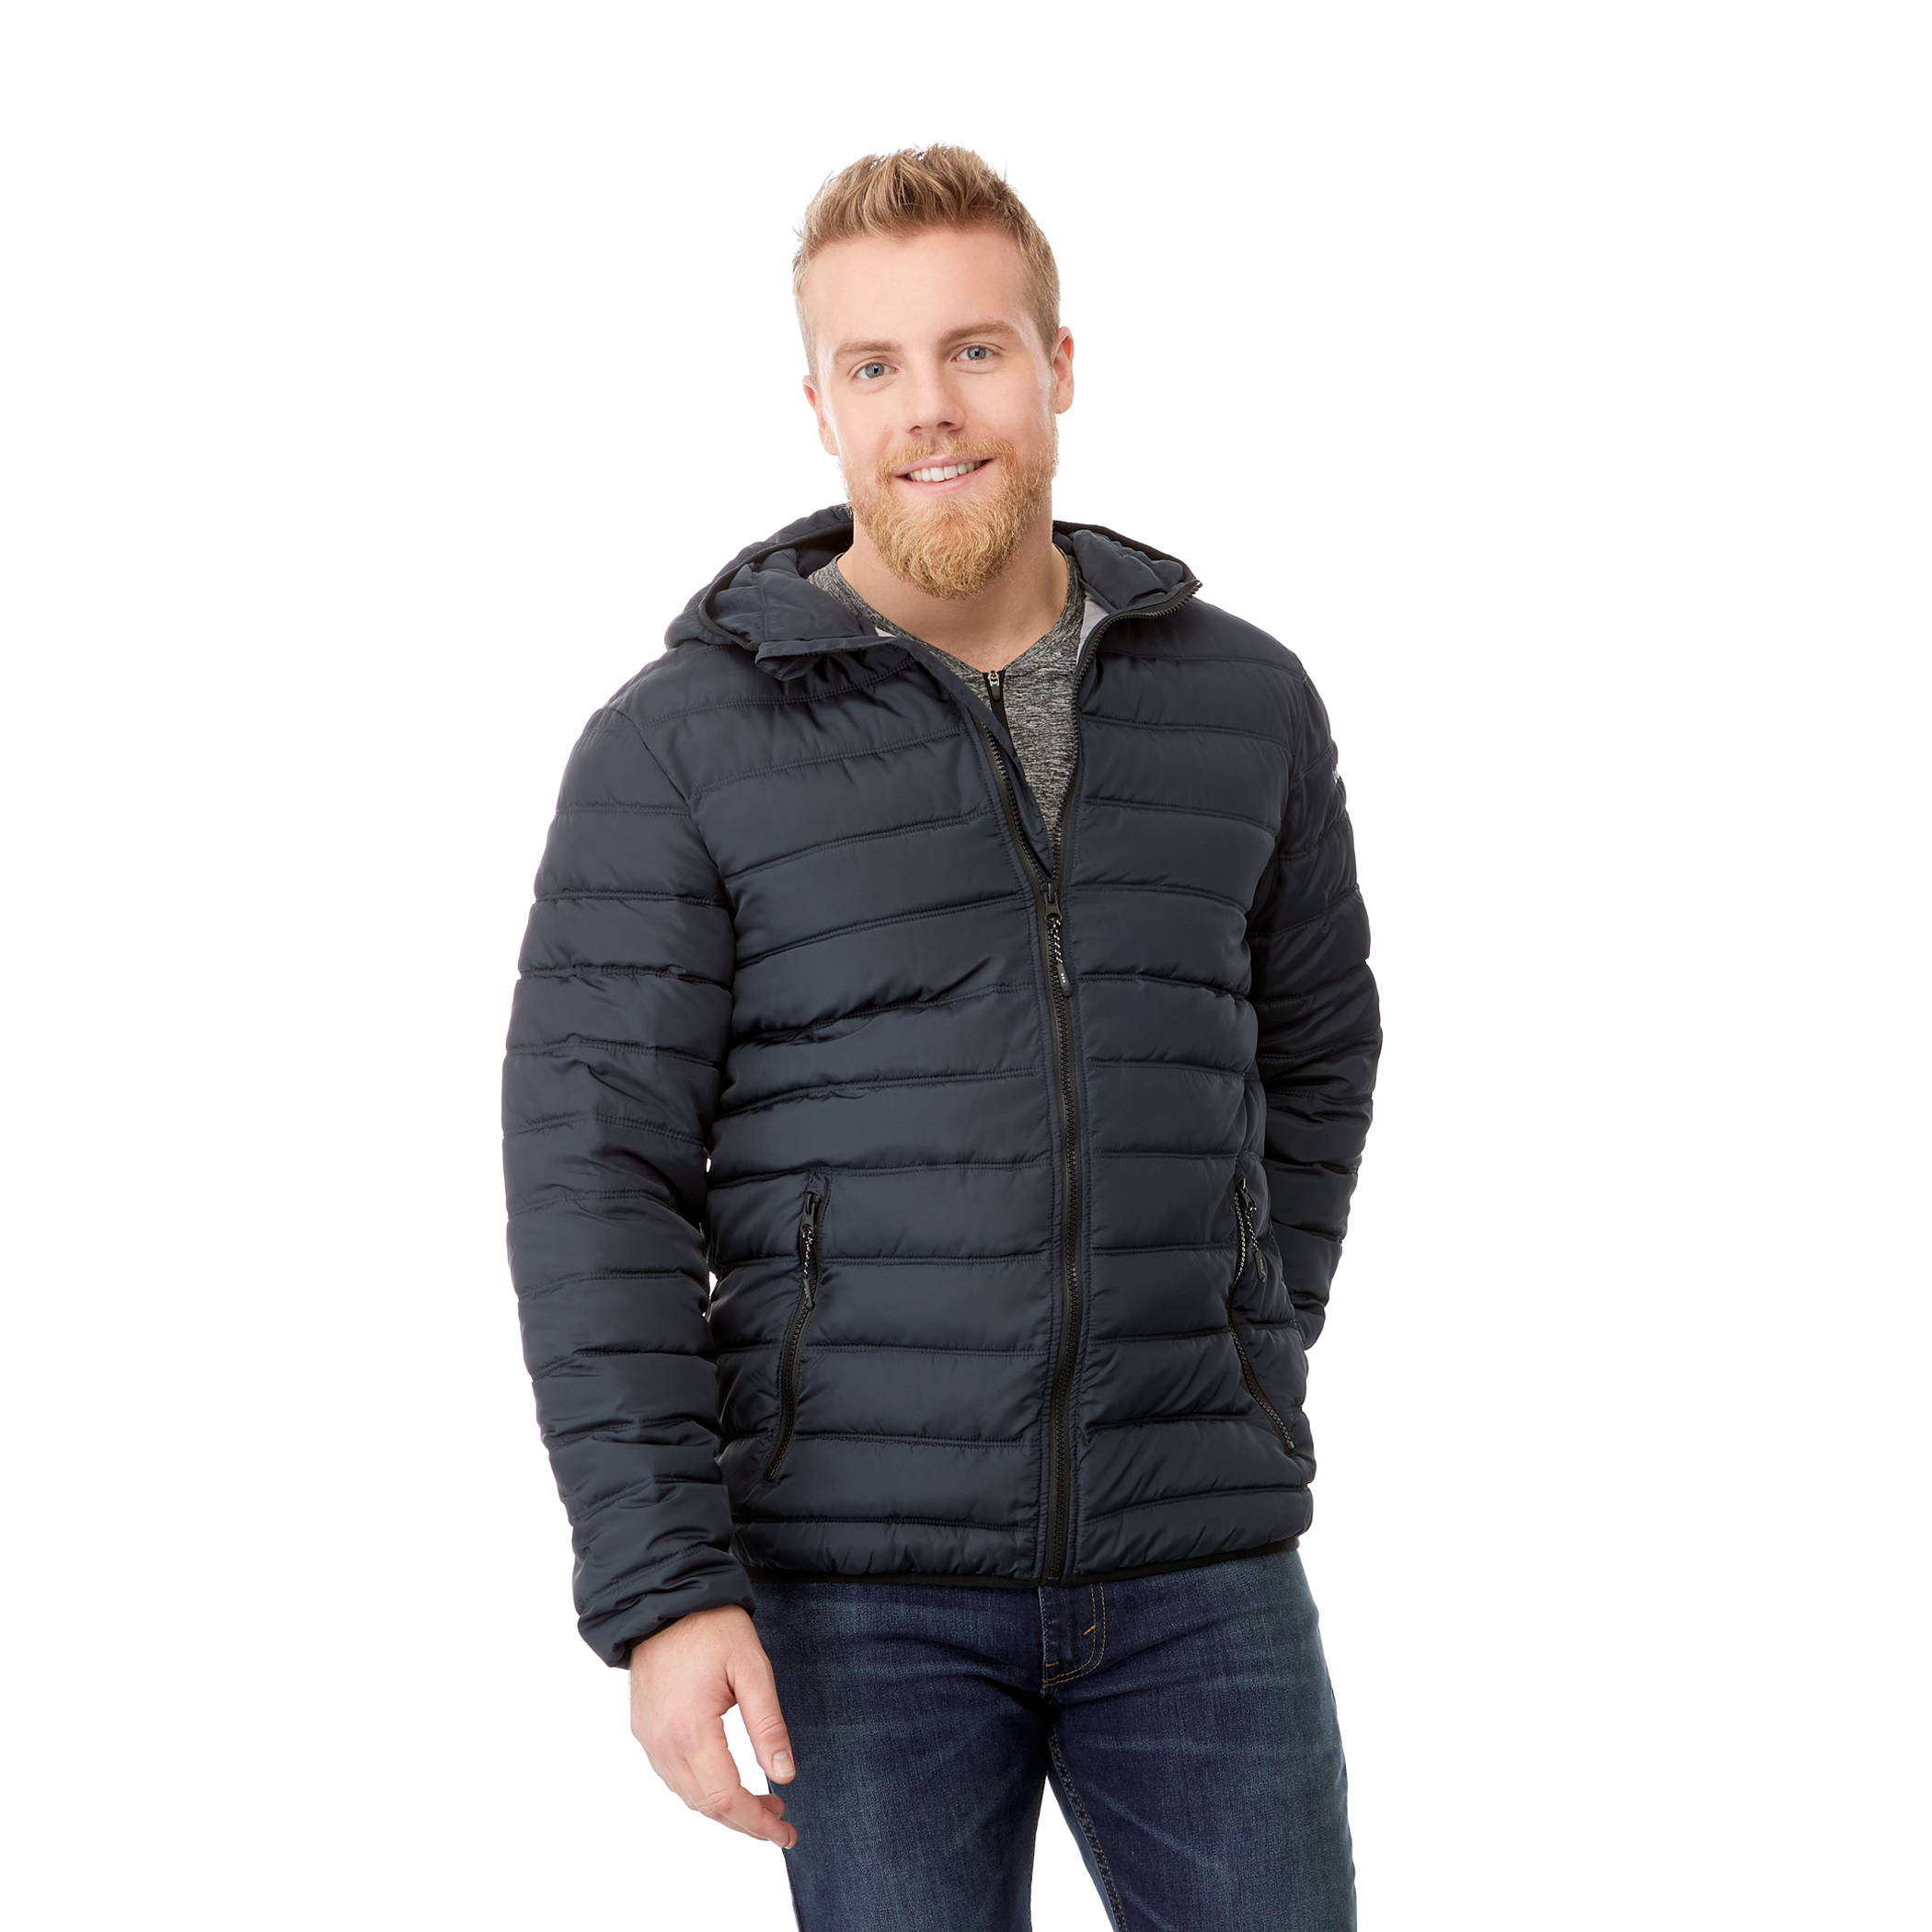 M-NORQUAY Insulated Jacket | Trimark Sportswear